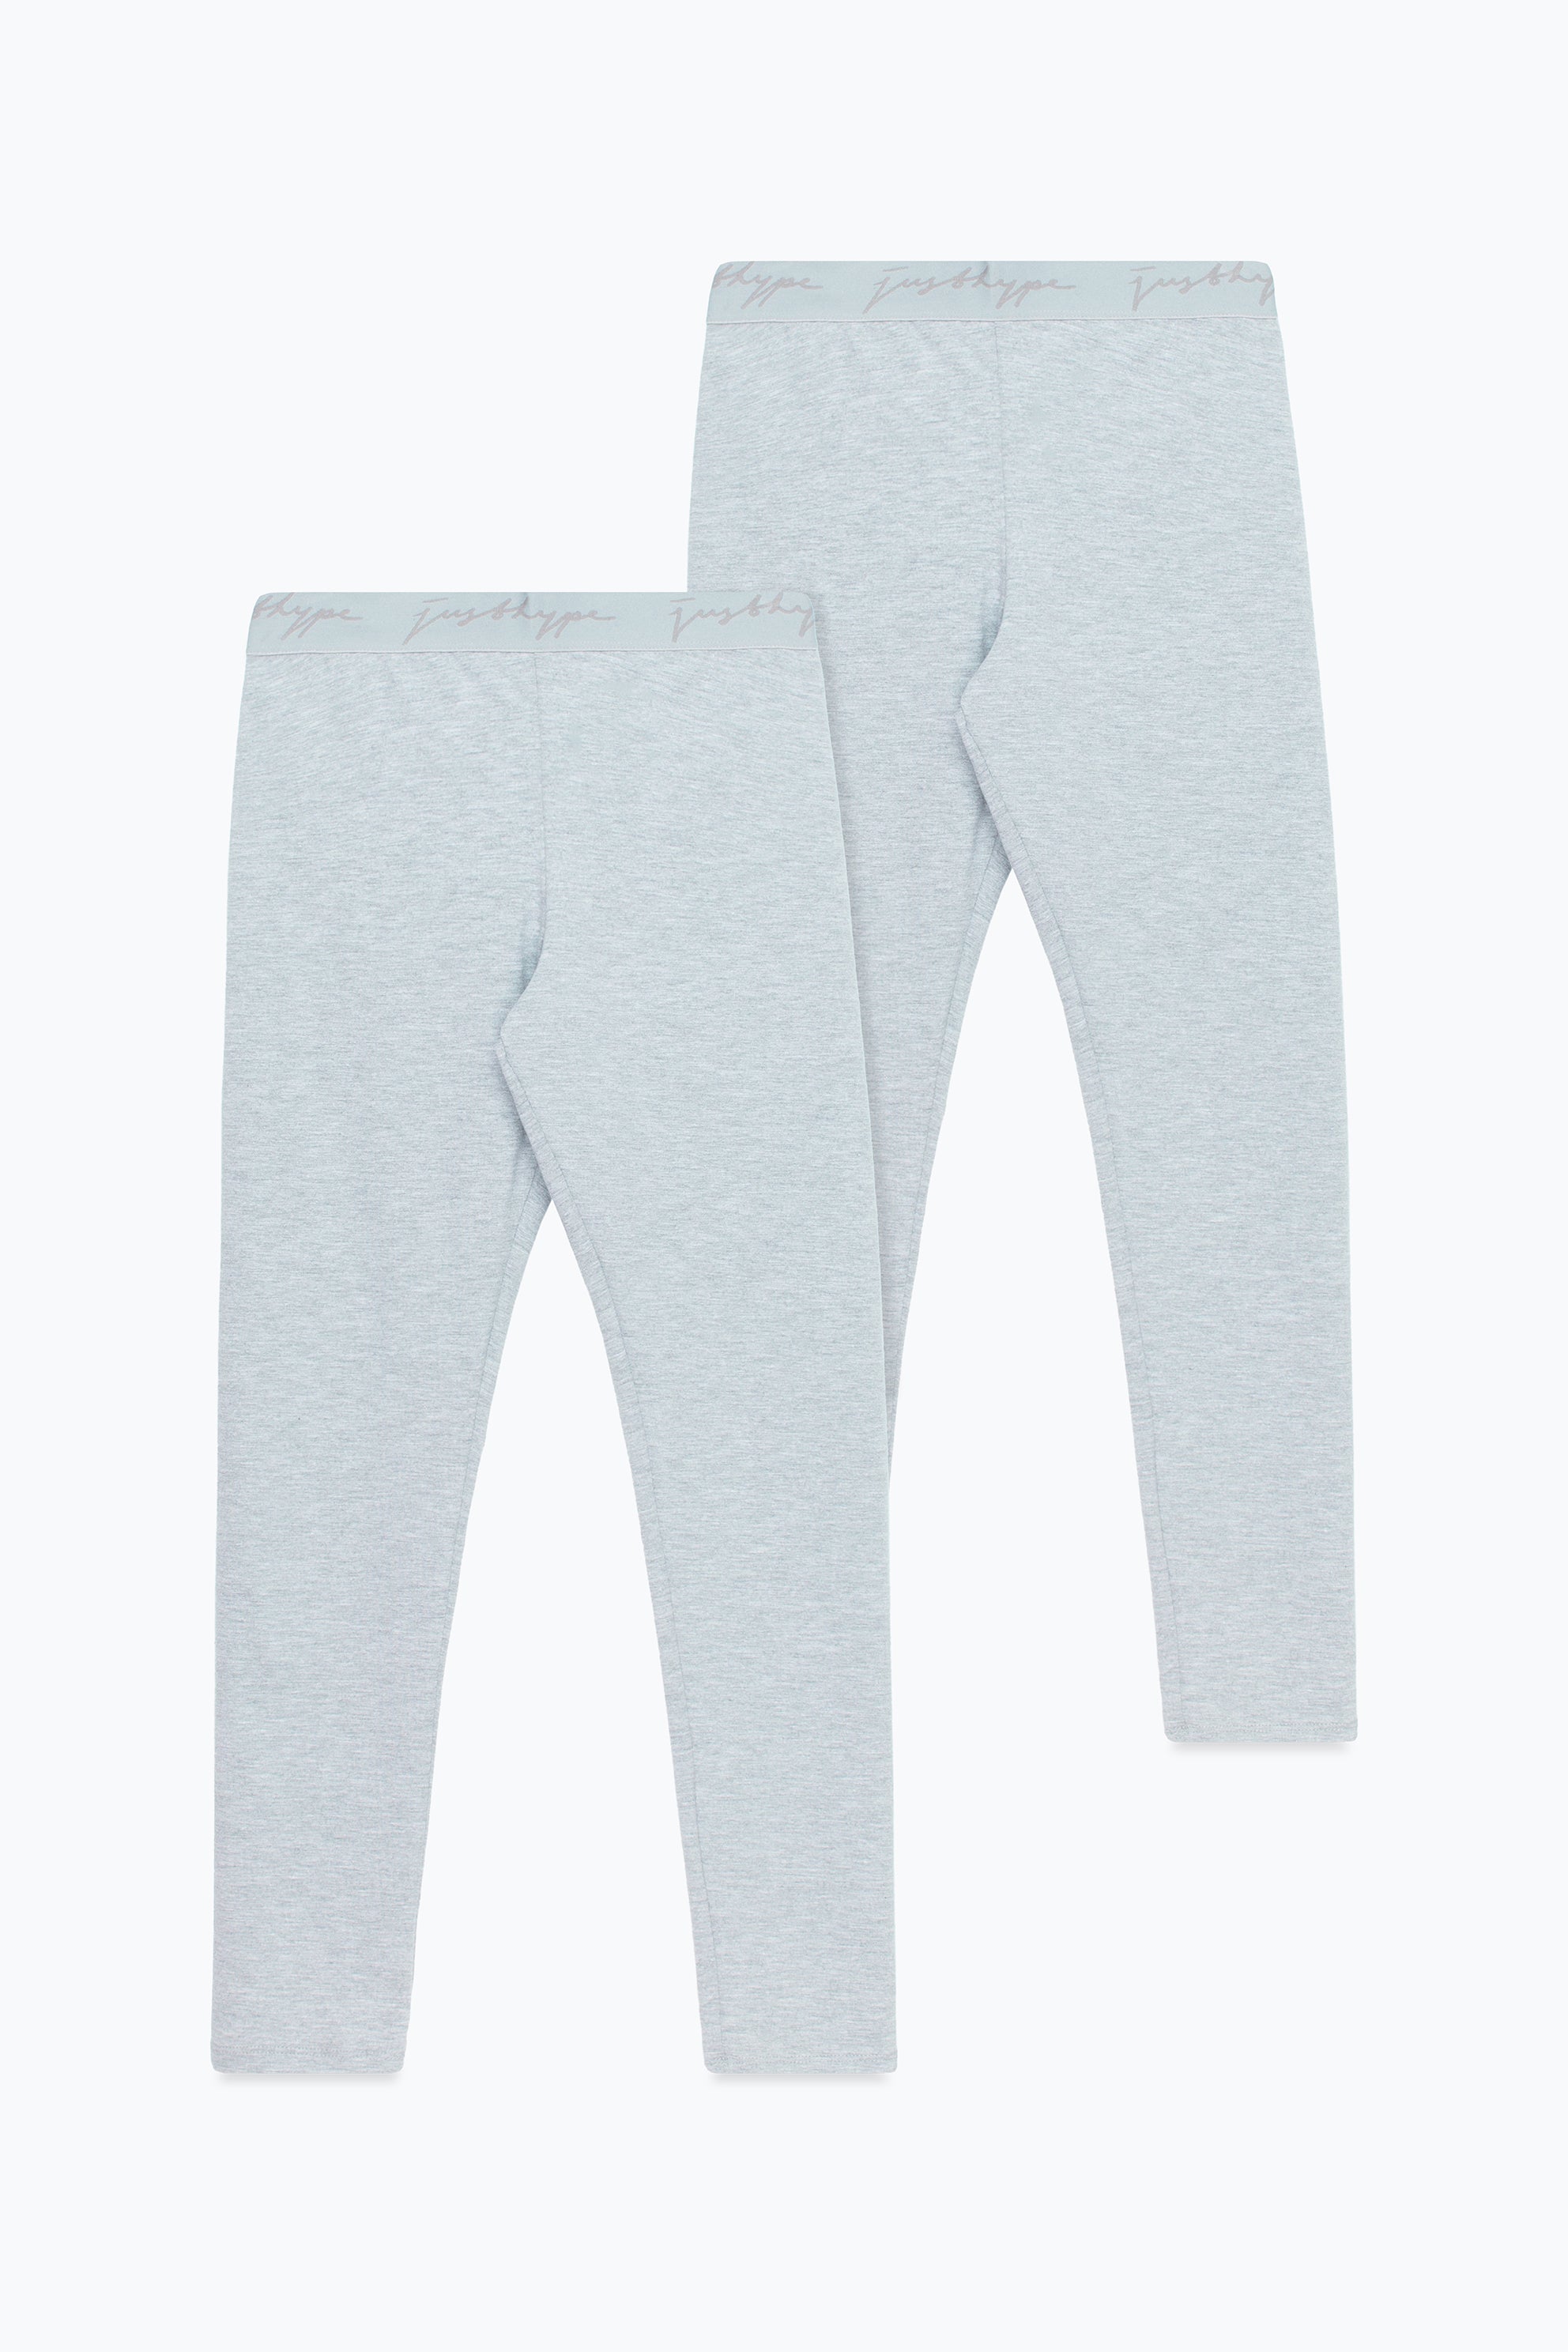 hype grey marl scribble 2 pack women’s leggings set